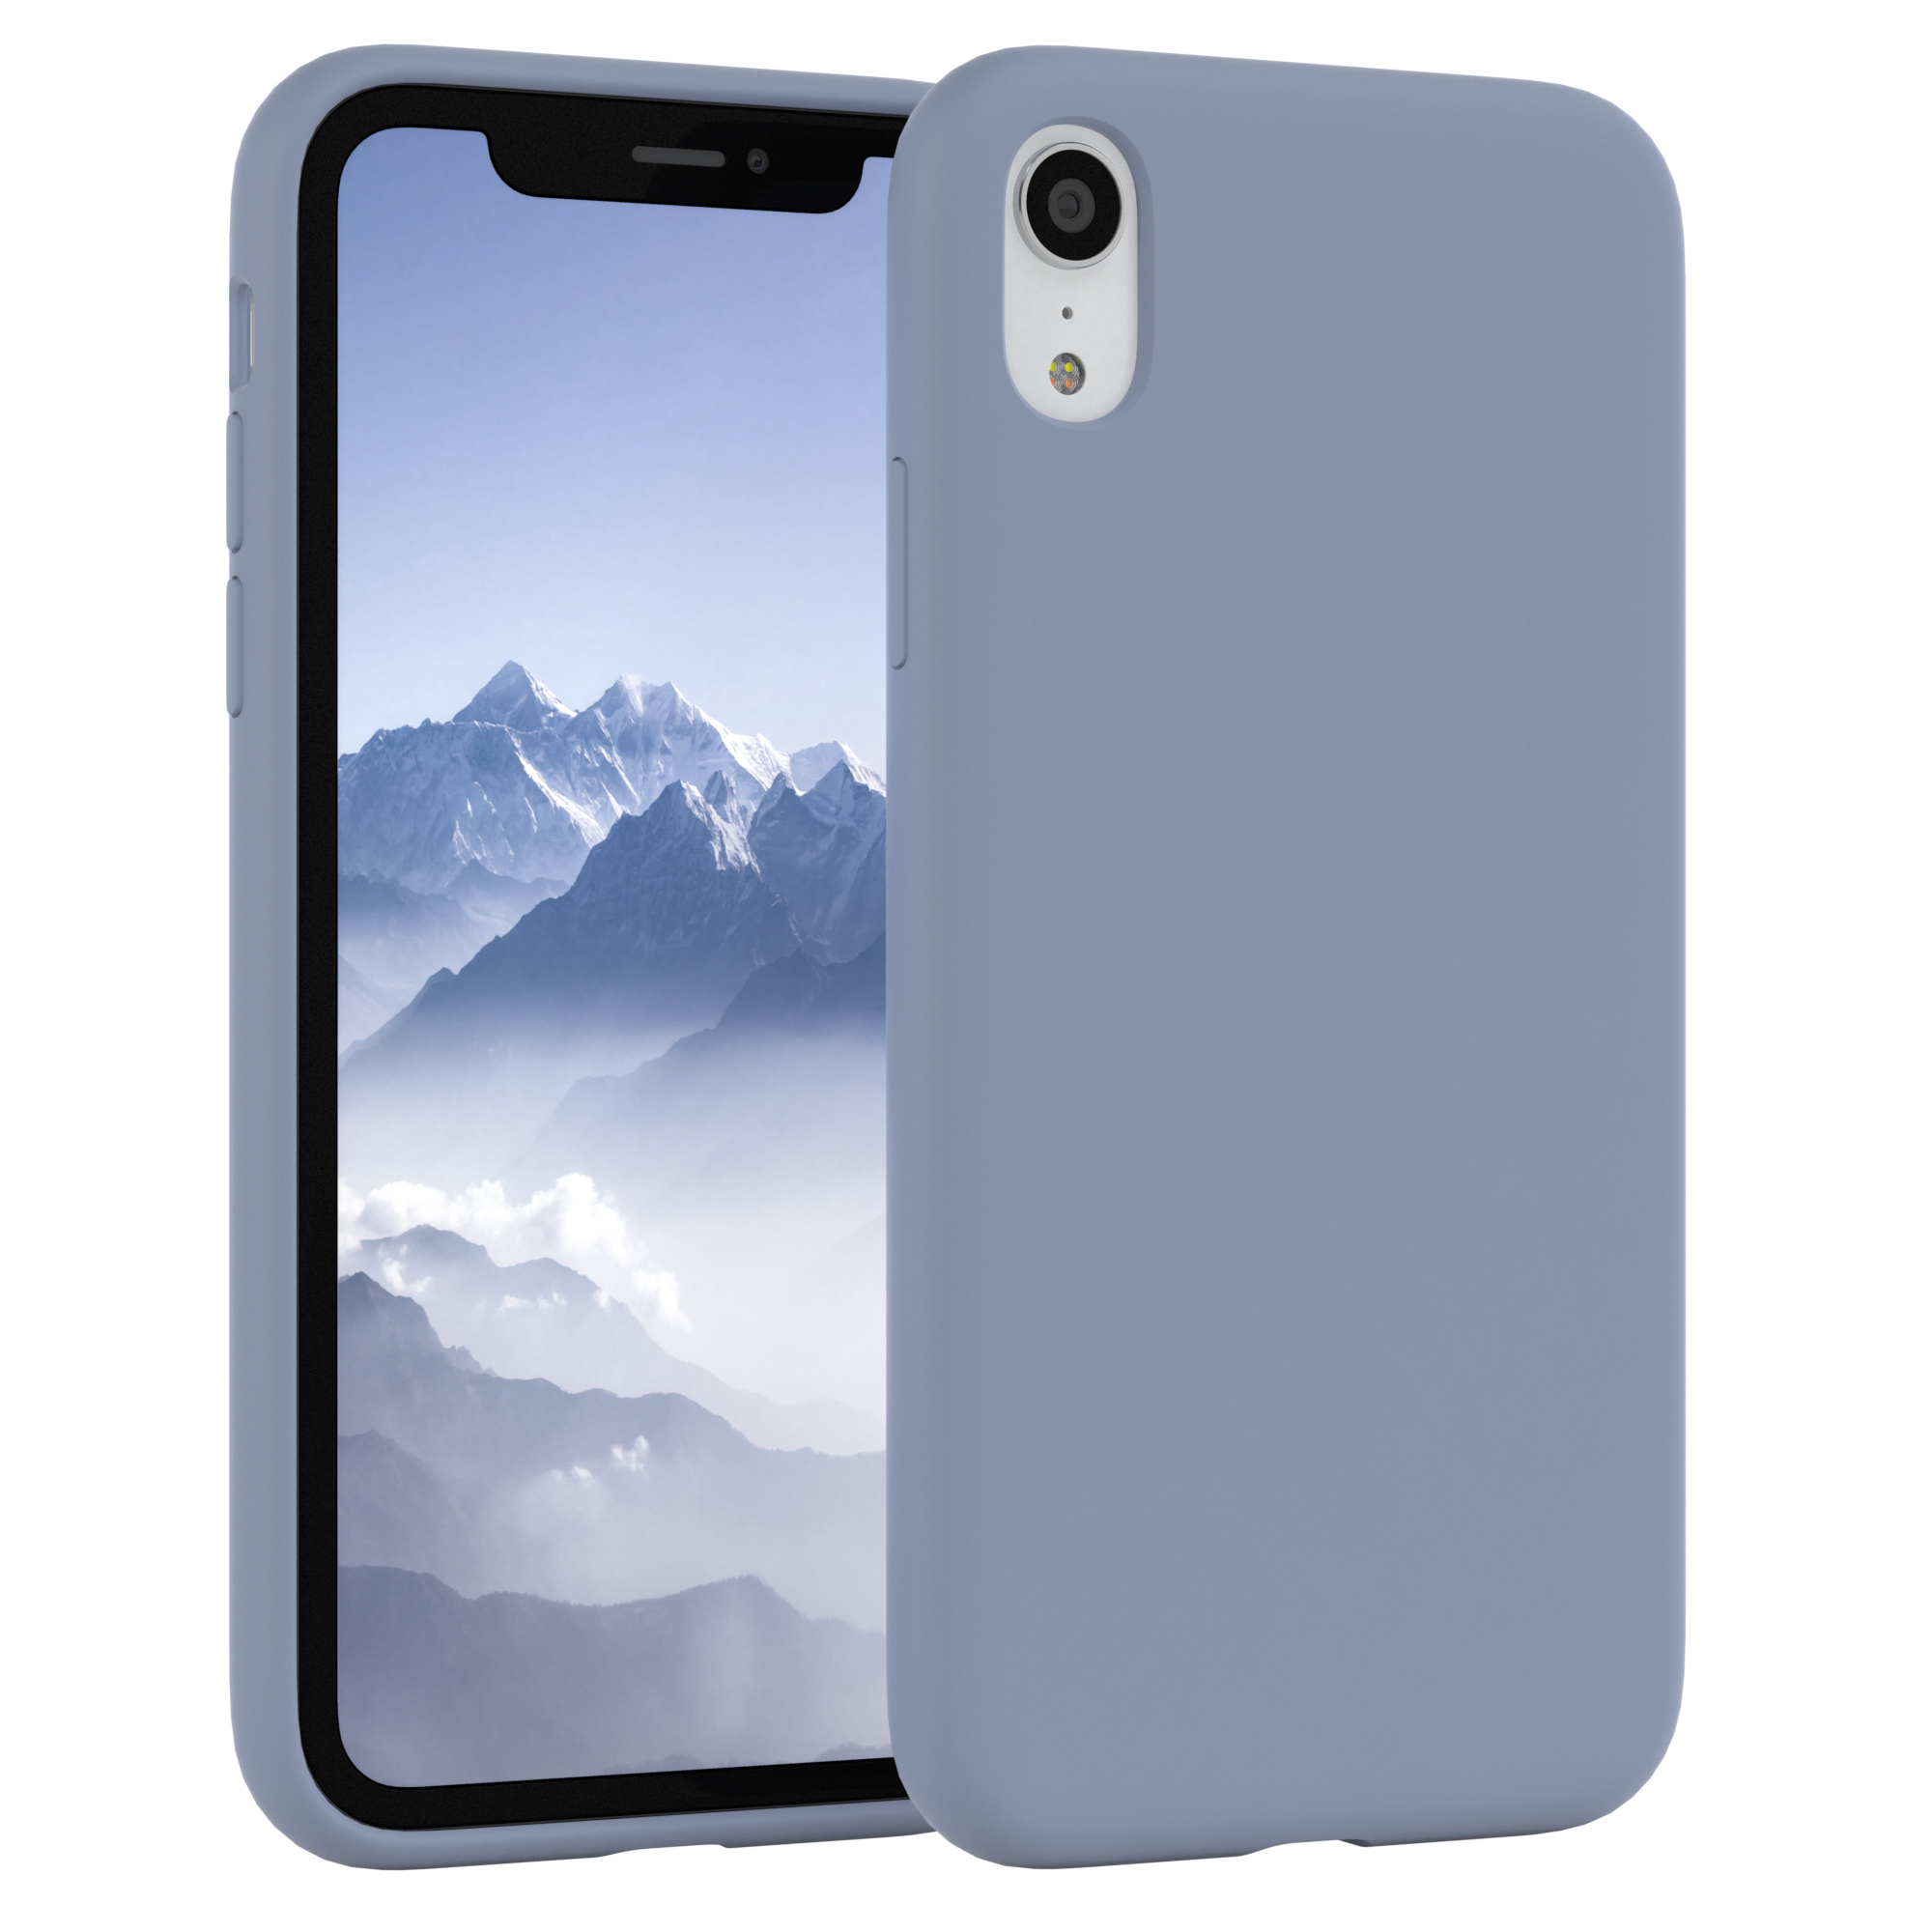 EAZY CASE Premium iPhone Backcover, Eis Apple, Handycase, Silikon Blau XR